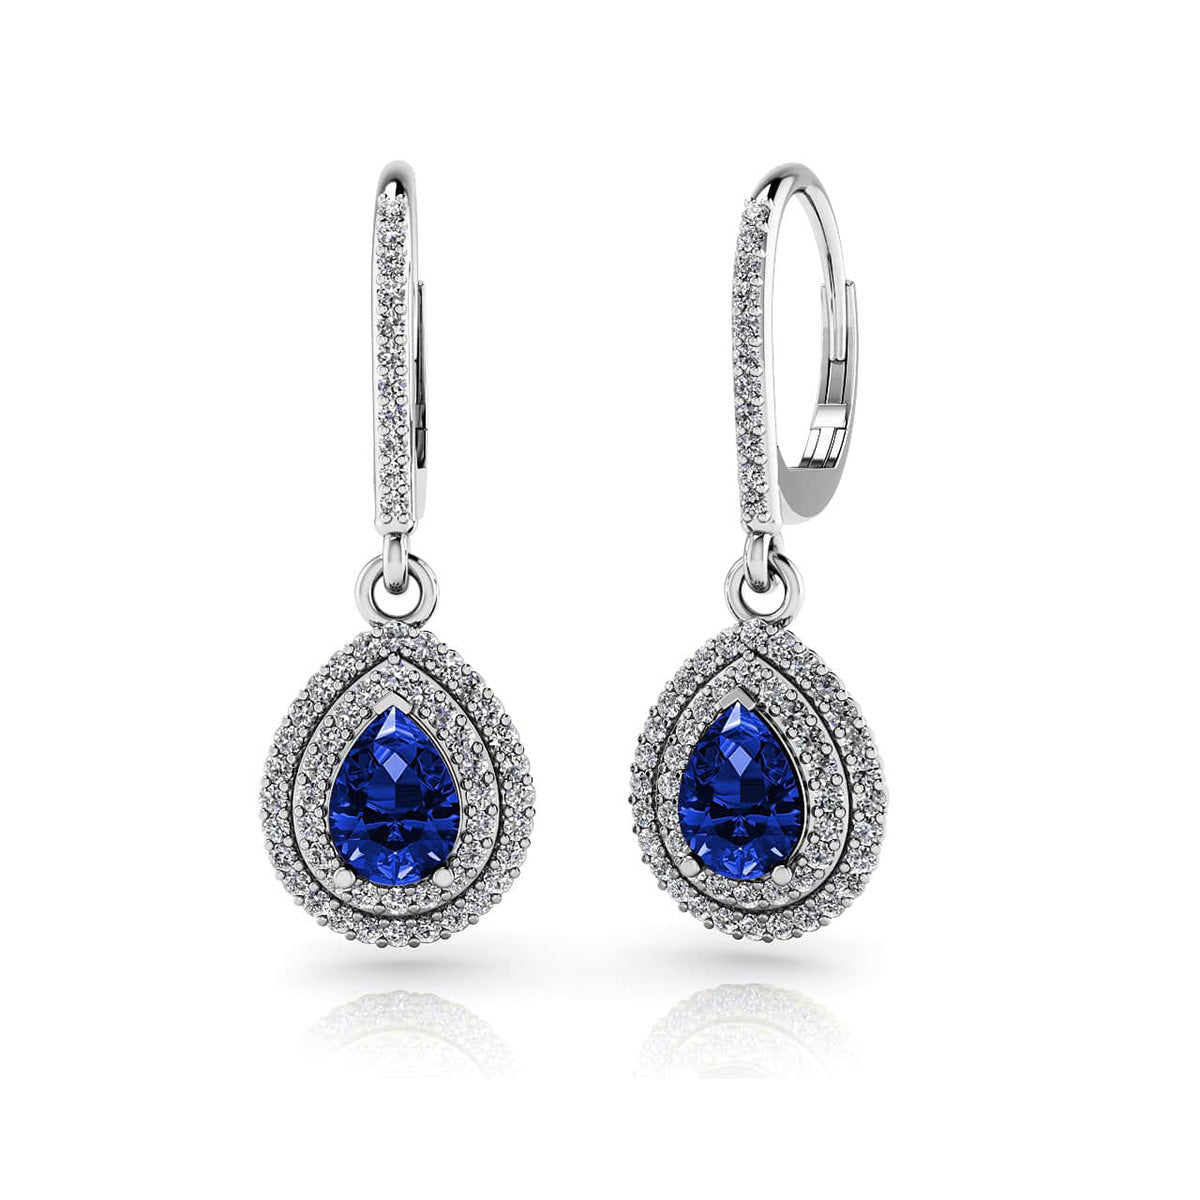 Vintage Teardrop Diamond And Gemstone Earrings